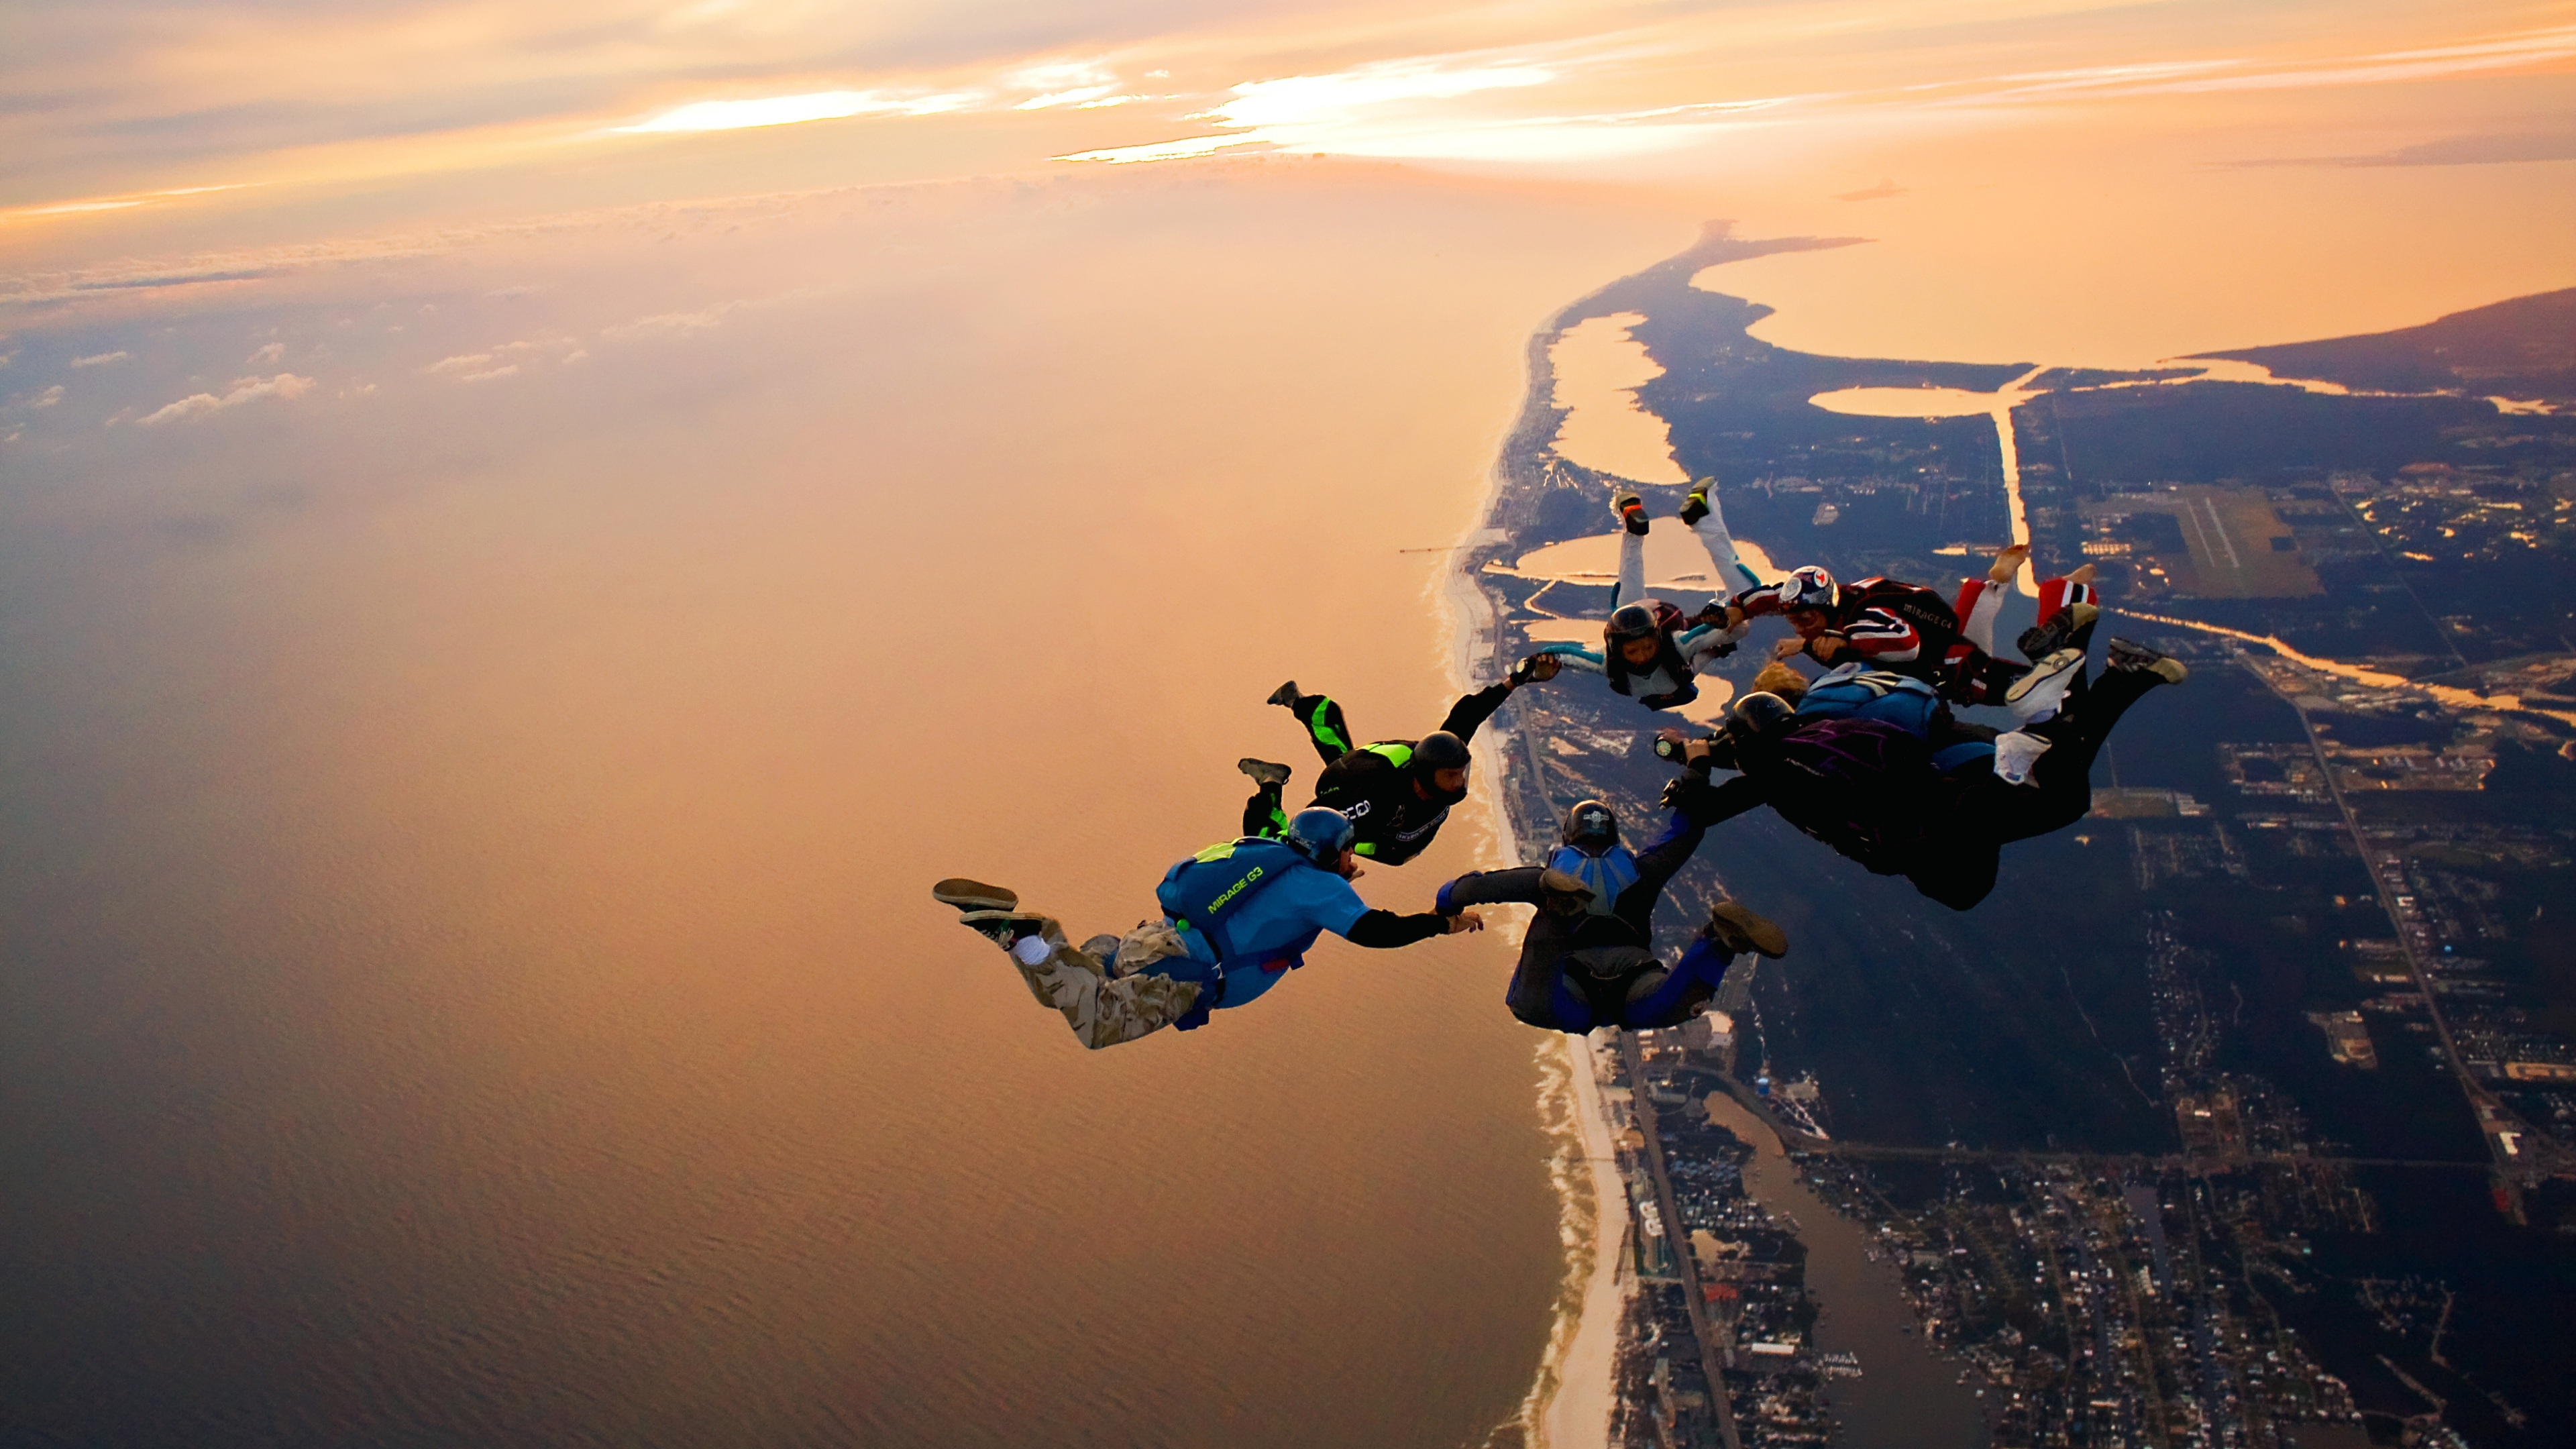 Parachuting: Group extreme air formation, Jumping with parachutes, Aerobatics. 3840x2160 4K Wallpaper.